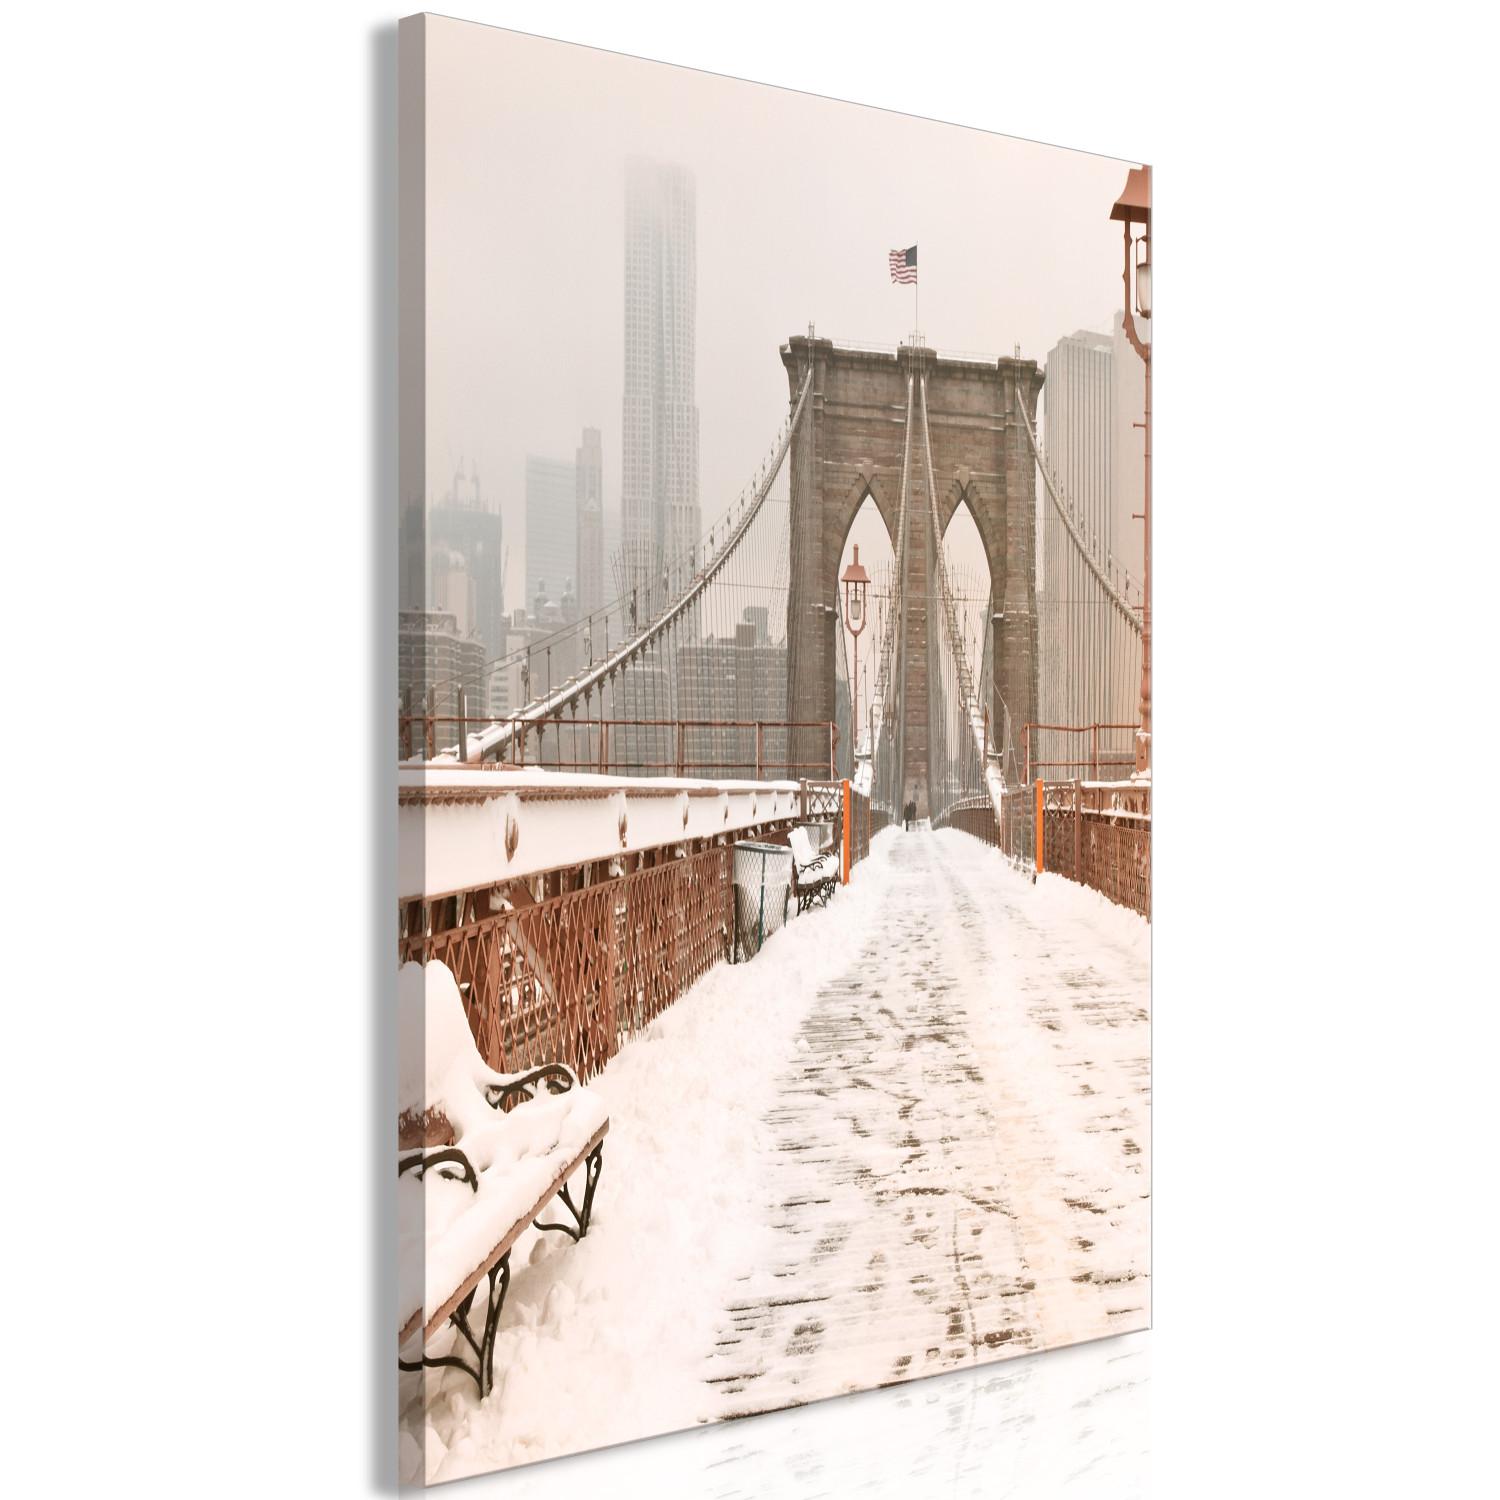 Canvas Brooklyn Bridge in snow and fog - New York City architecture photo